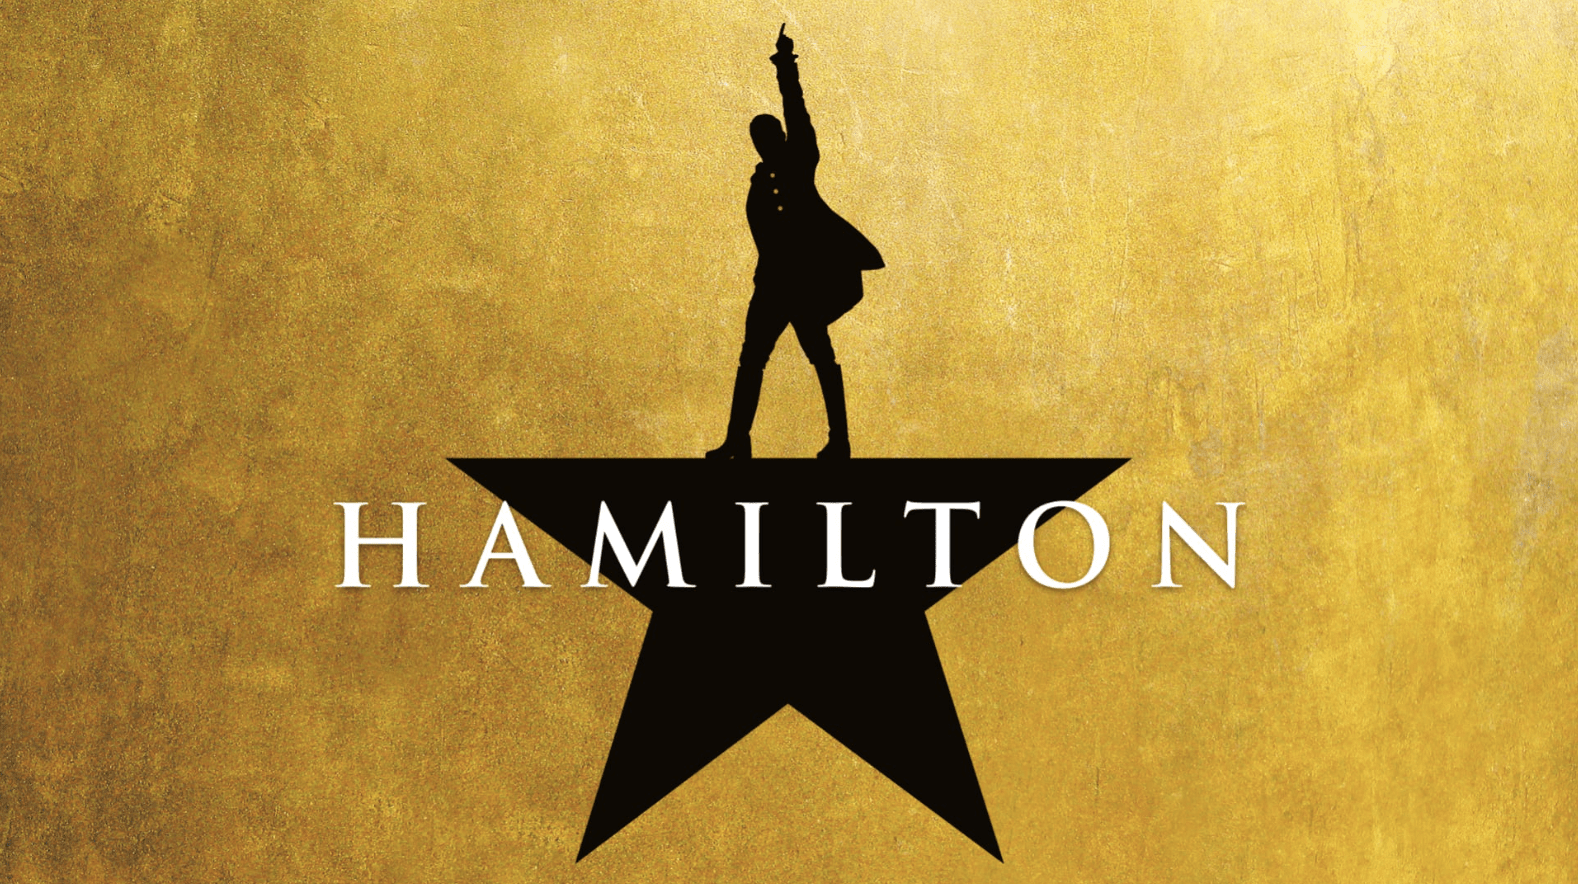 HAMILTON is the story of America's Founding Father Alexander Hamilton